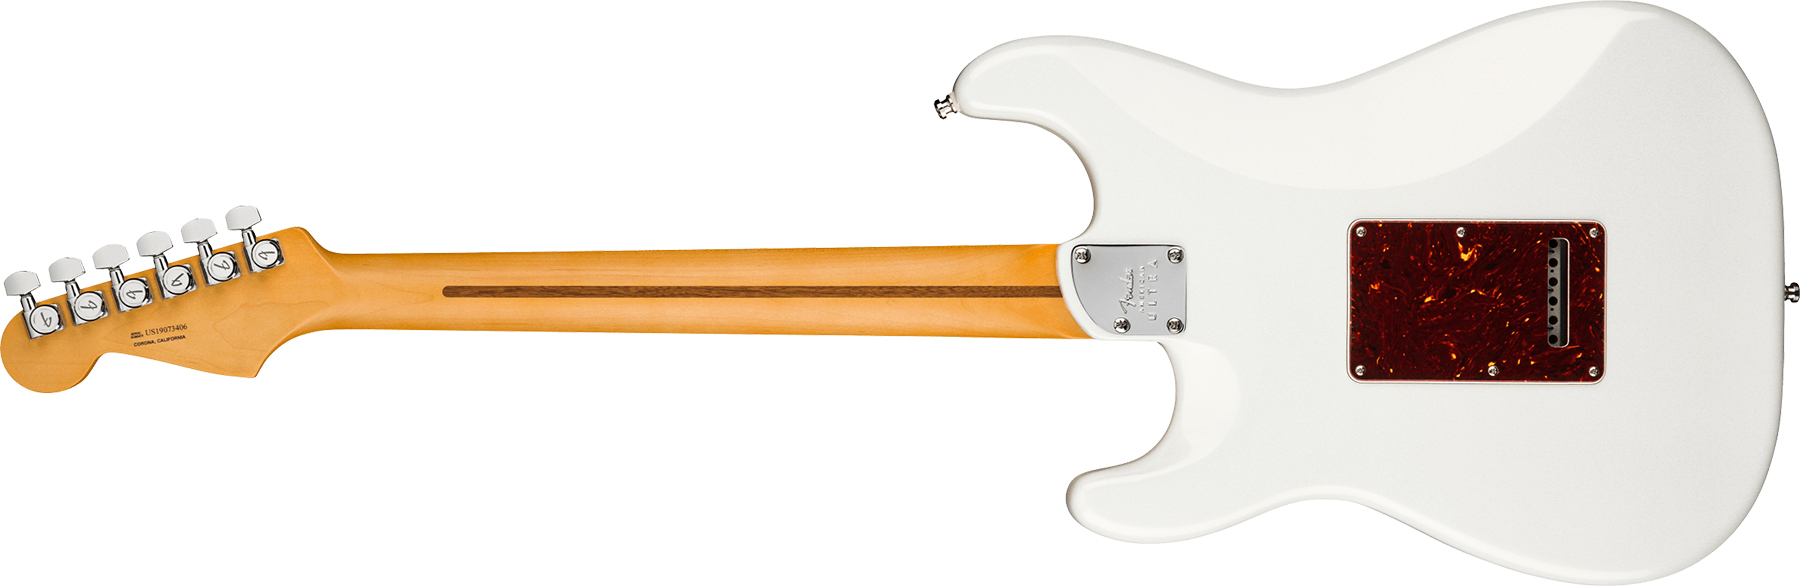 Fender Strat American Ultra 2019 Usa Rw - Arctic Pearl - Str shape electric guitar - Variation 1